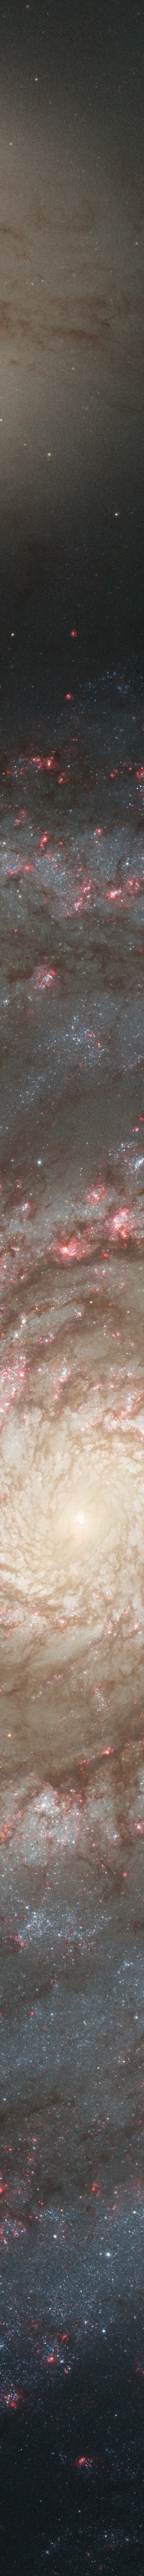 Image credit: NASA, ESA and the Hubble Heritage Team (STScI / AURA).